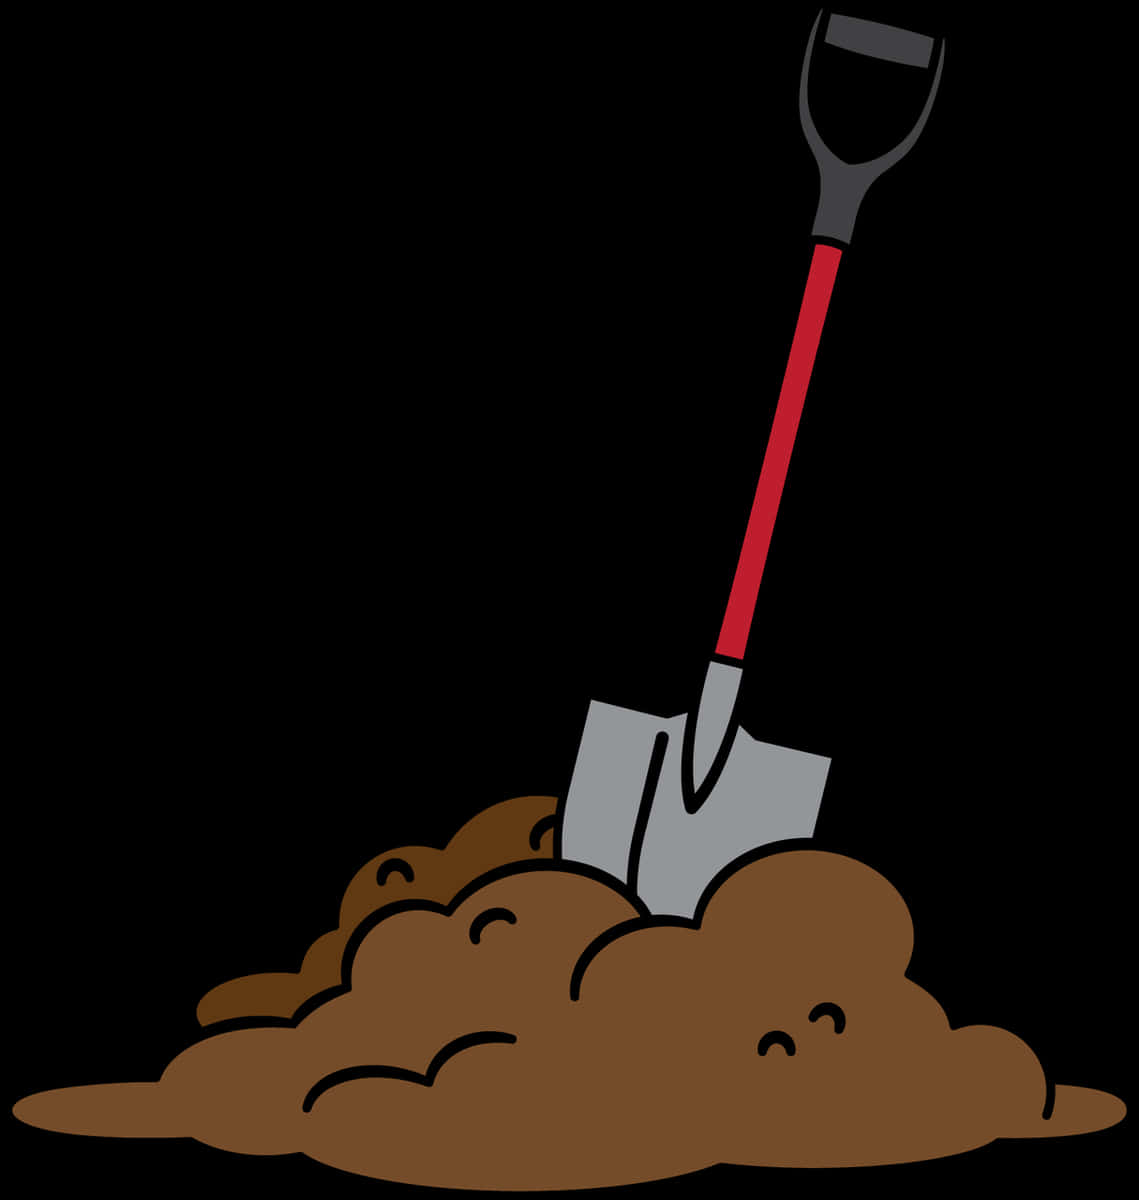 A Shovel In The Dirt